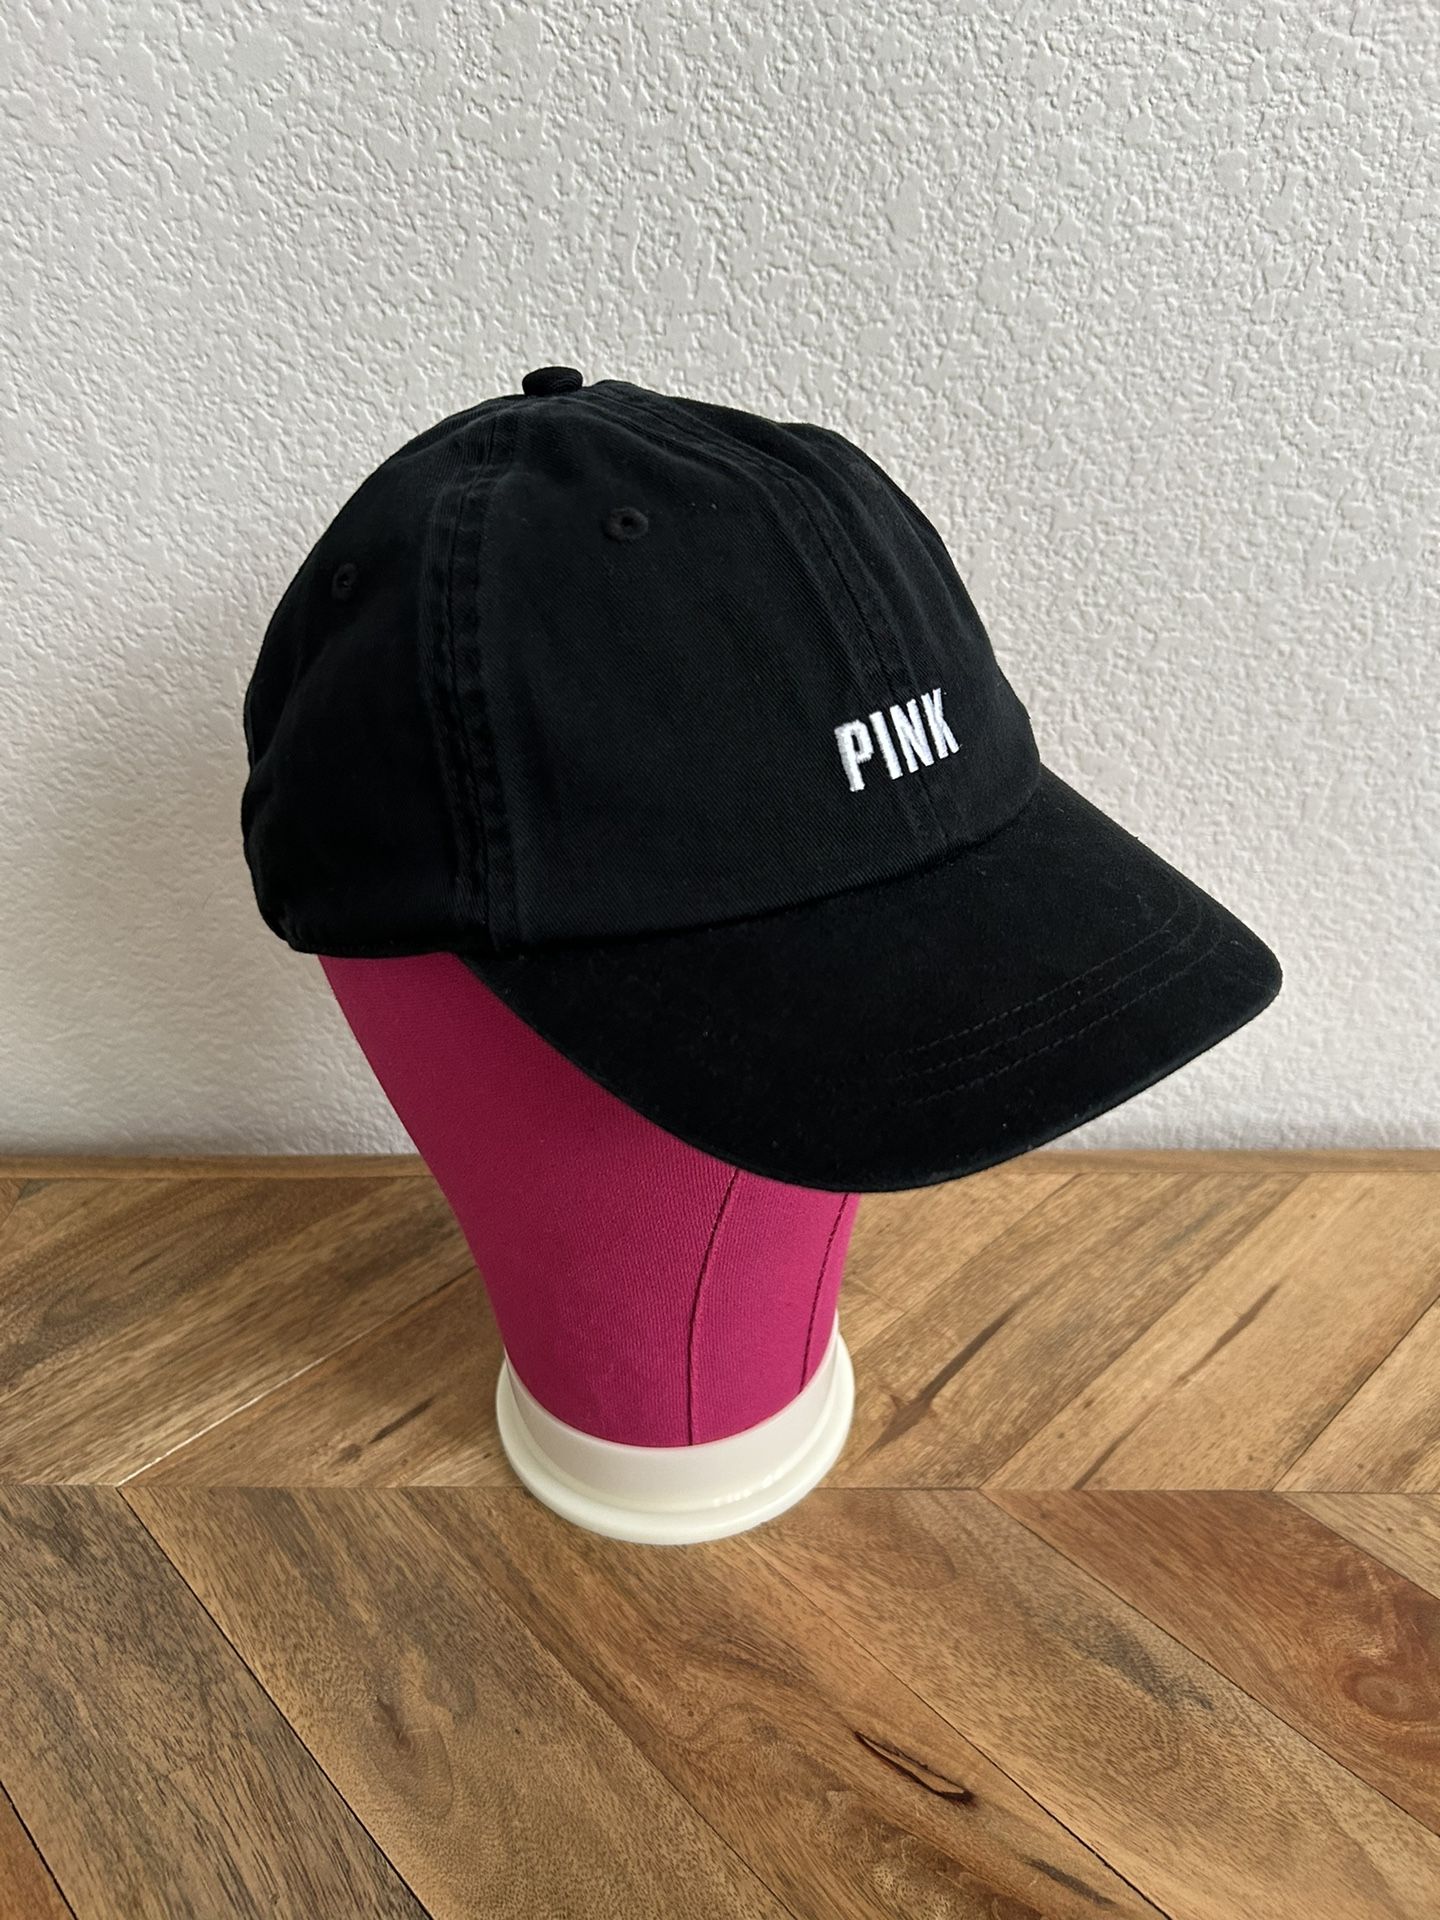 NEW Victoria’s Secret PINK Baseball Hat Cap MSRP $20 See My List Summerlin West Las Vegas 